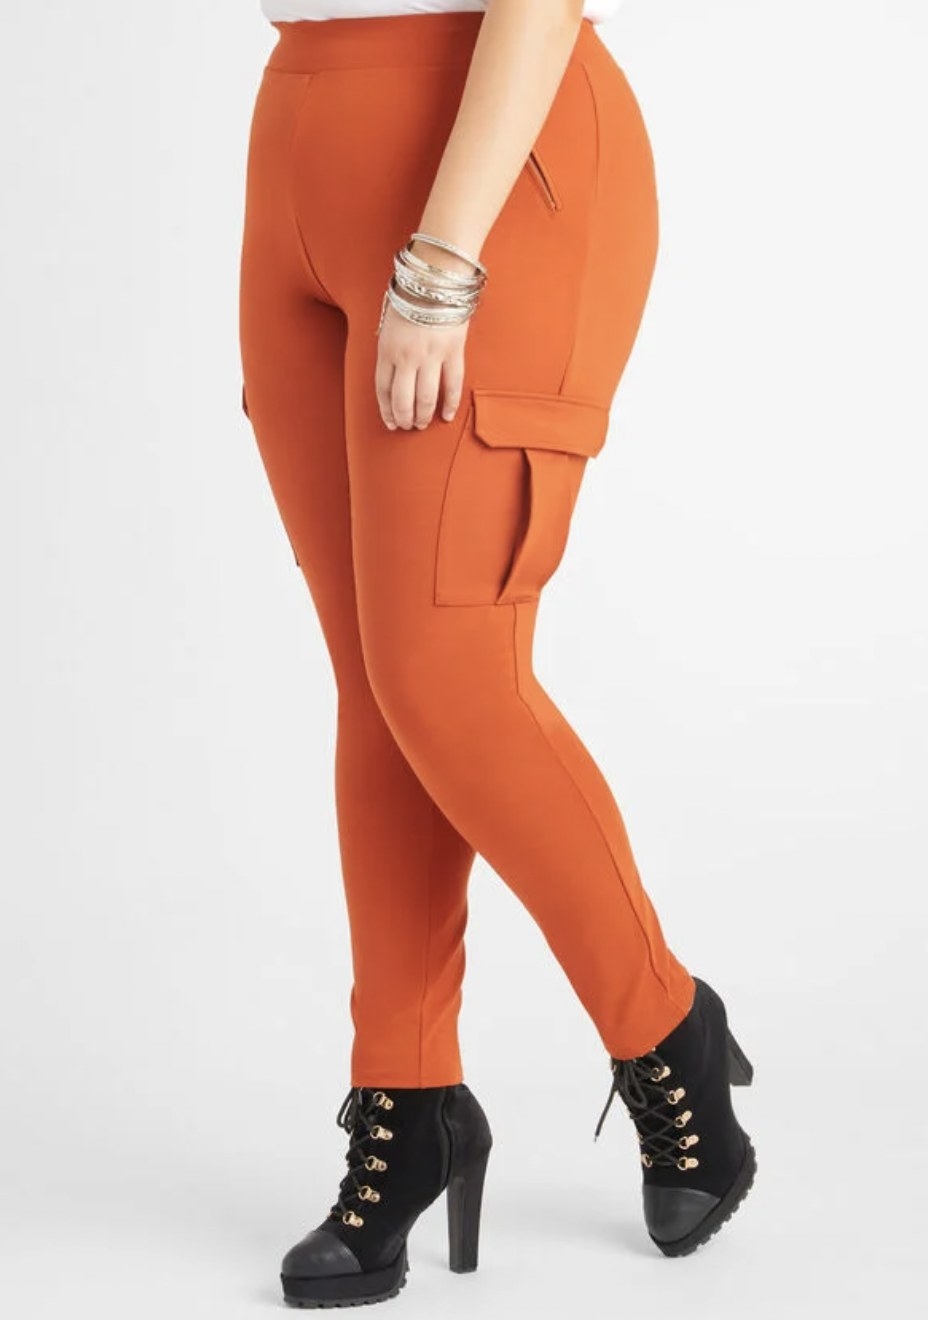 The orange leggings showing flap-top cargo pocket on side